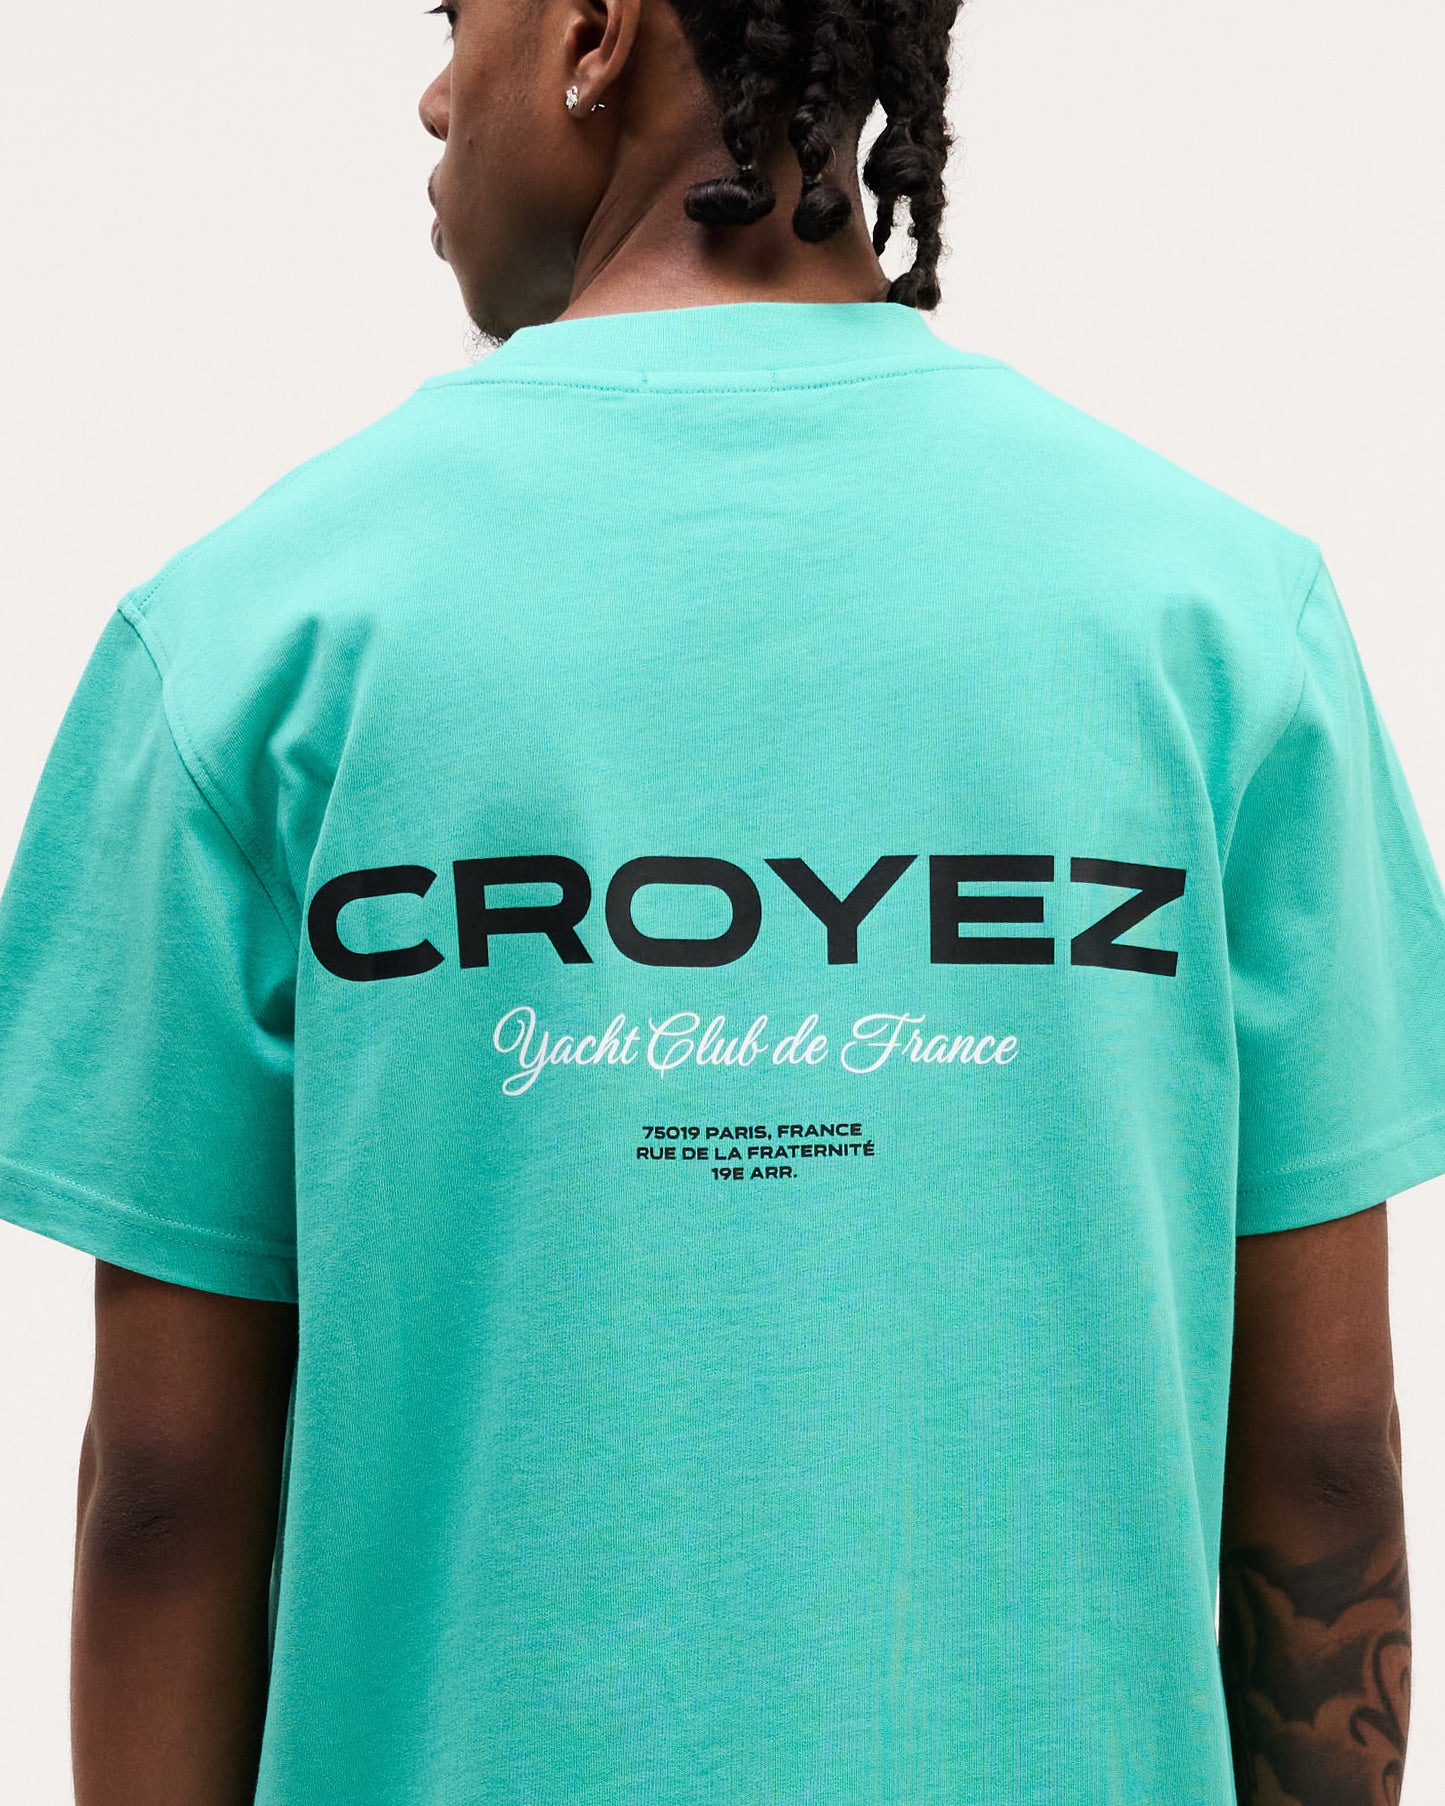 CROYEZ YACHT CLUB T-SHIRT - TEAL/BLACK